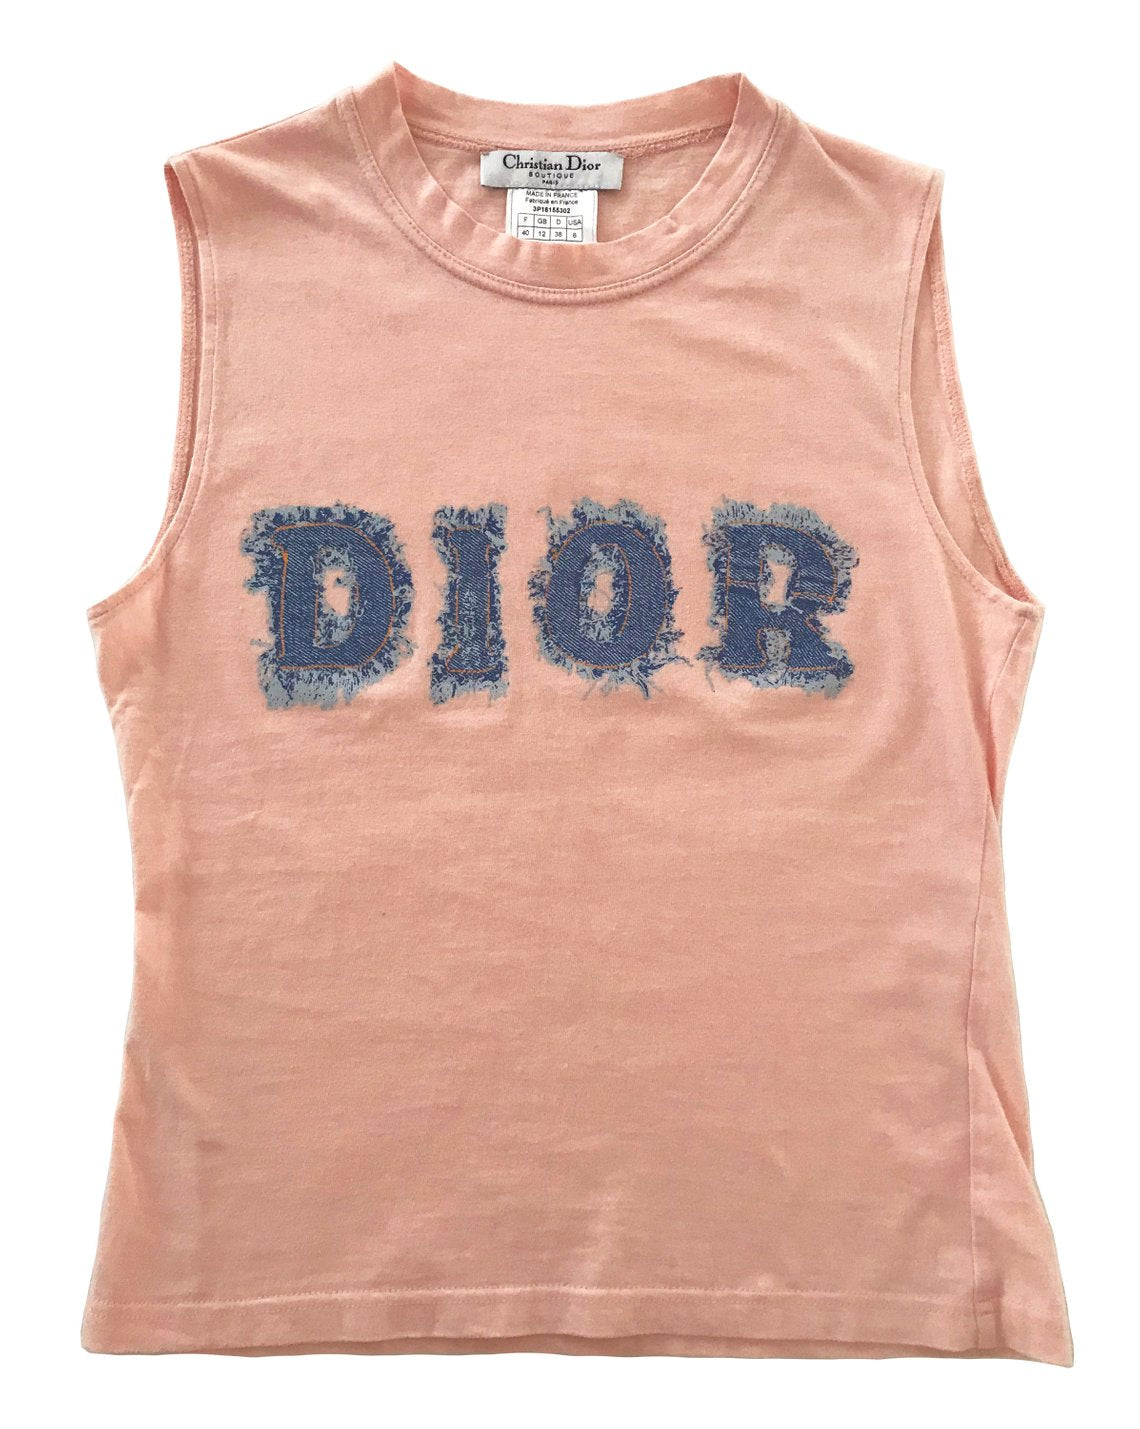 Fruit Vintage Christian Dior Pink Logo tank top dating to the Galliano era Dior, features a Denim look transfer design Monogram.